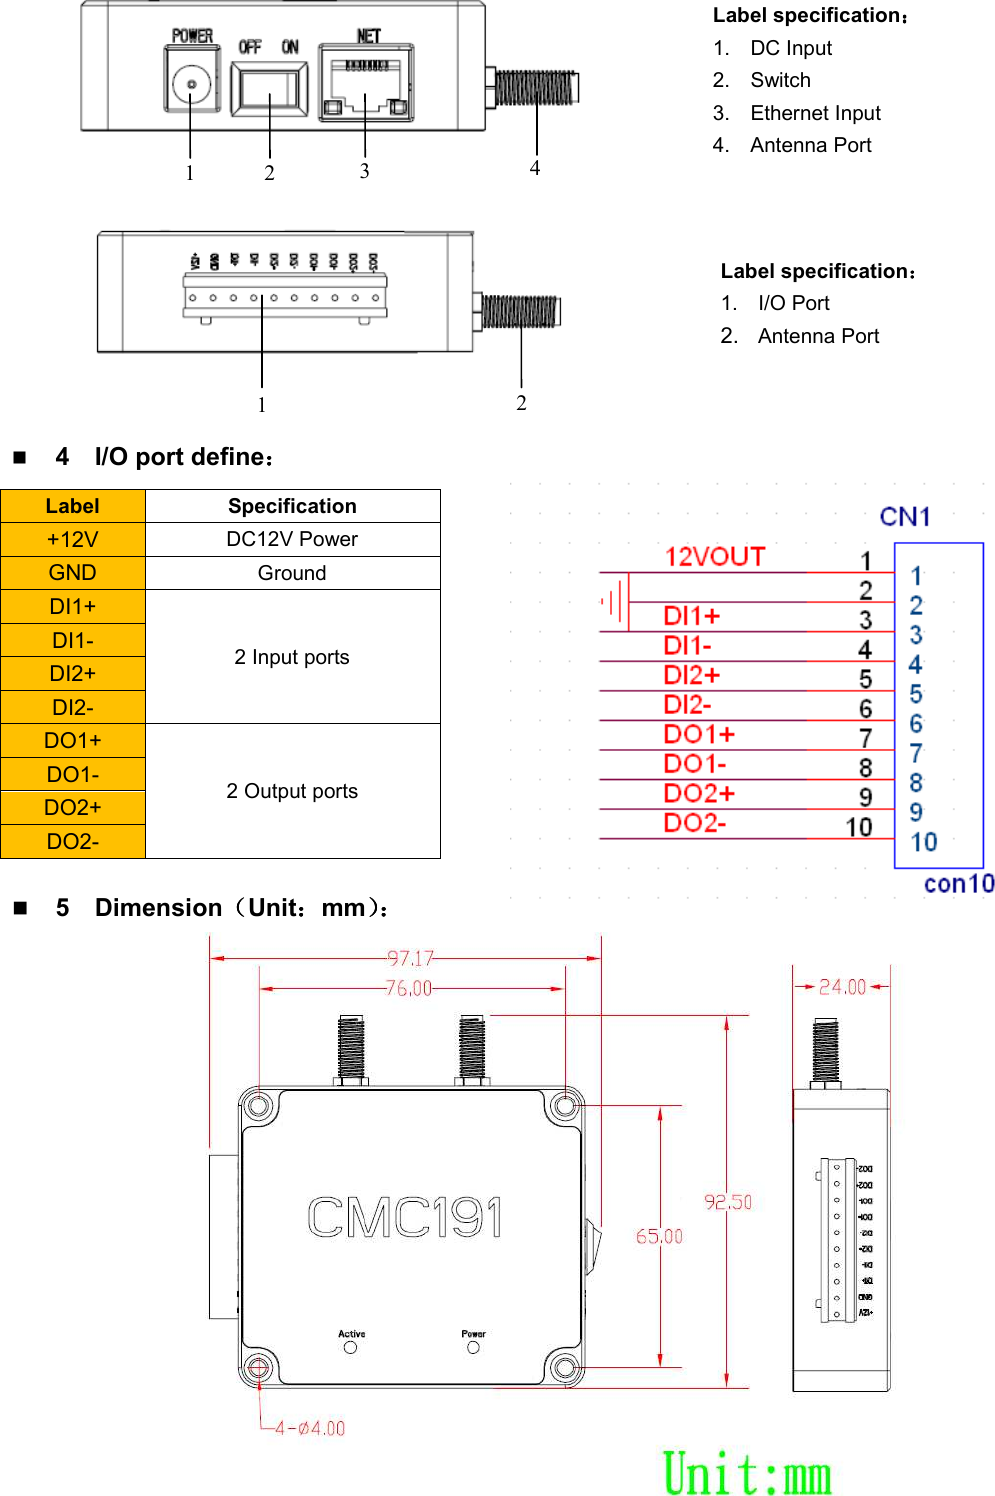      4    I/O port define：：：： Label  Specification +12V DC12V Power GND Ground DI1+ 2 Input ports DI1- DI2+ DI2- DO1+ 2 Output ports DO1- DO2+ DO2-   5    Dimension（（（（Unit：：：：mm）：）：）：）：    1  2  4 3 Label specification：：：： 1.  DC Input 2.  Switch 3.  Ethernet Input 4.  Antenna Port 1  2 Label specification：：：： 1.  I/O Port 2. Antenna Port 